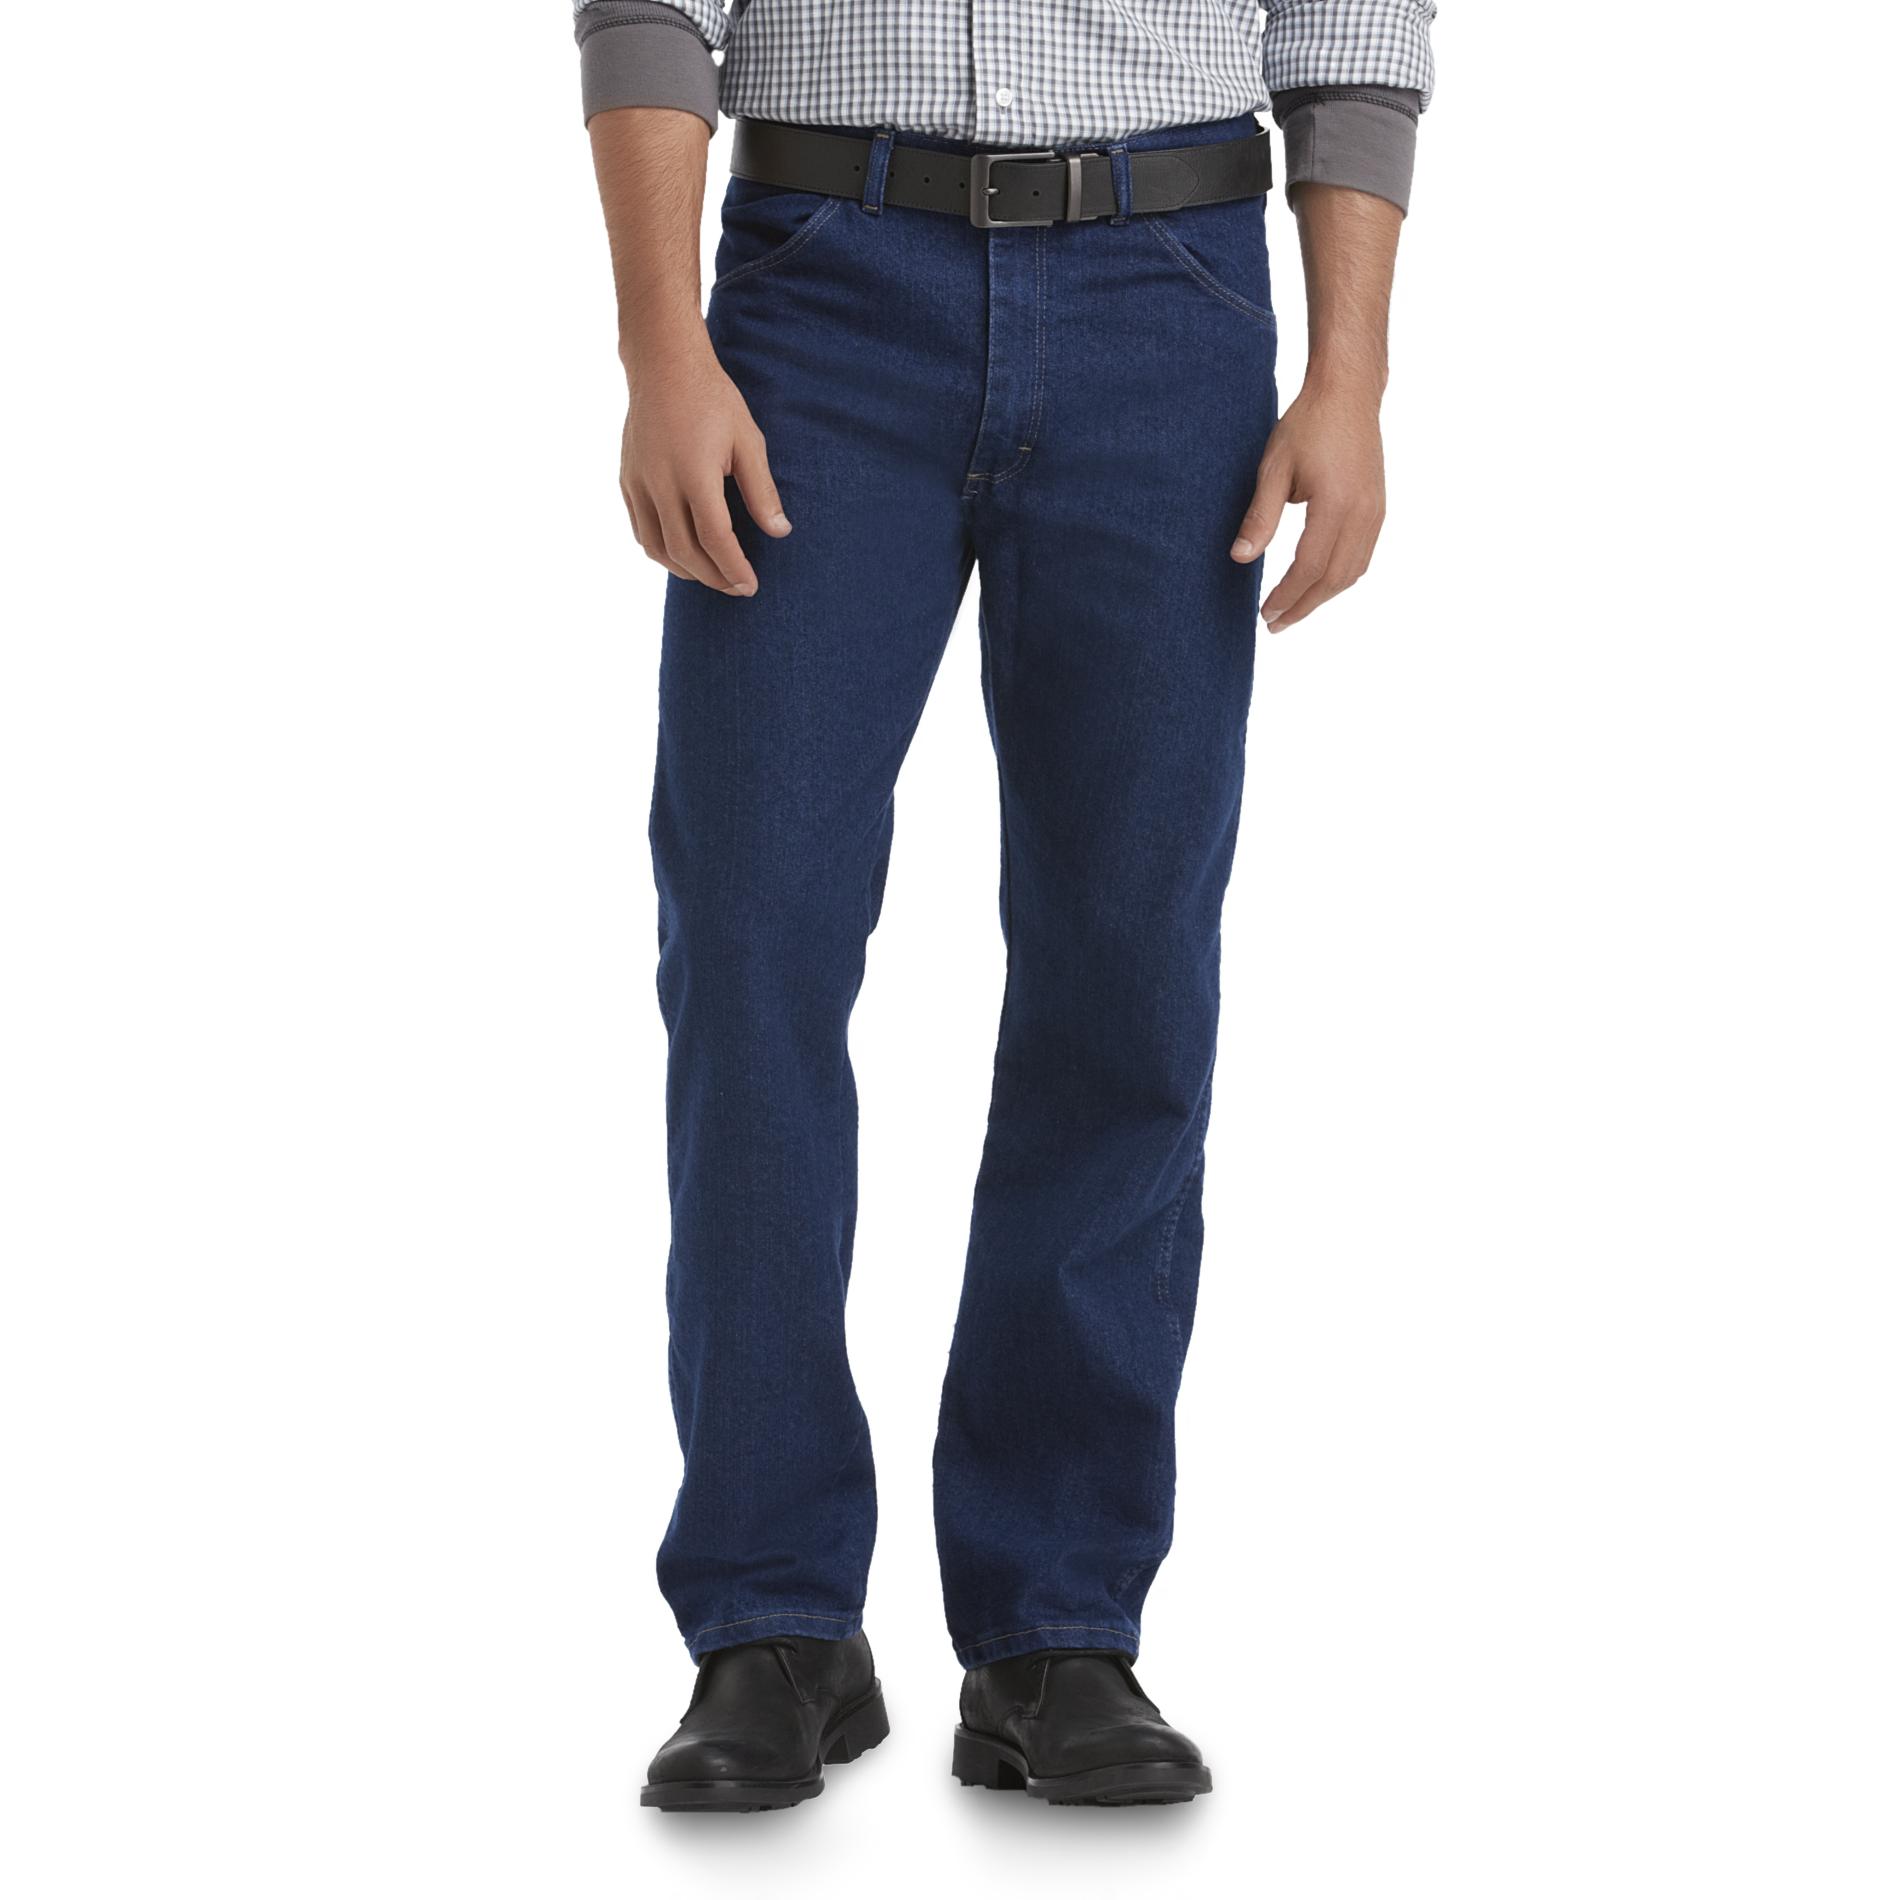 Men's Dark Wash Stretch Jeans - Regular Fit